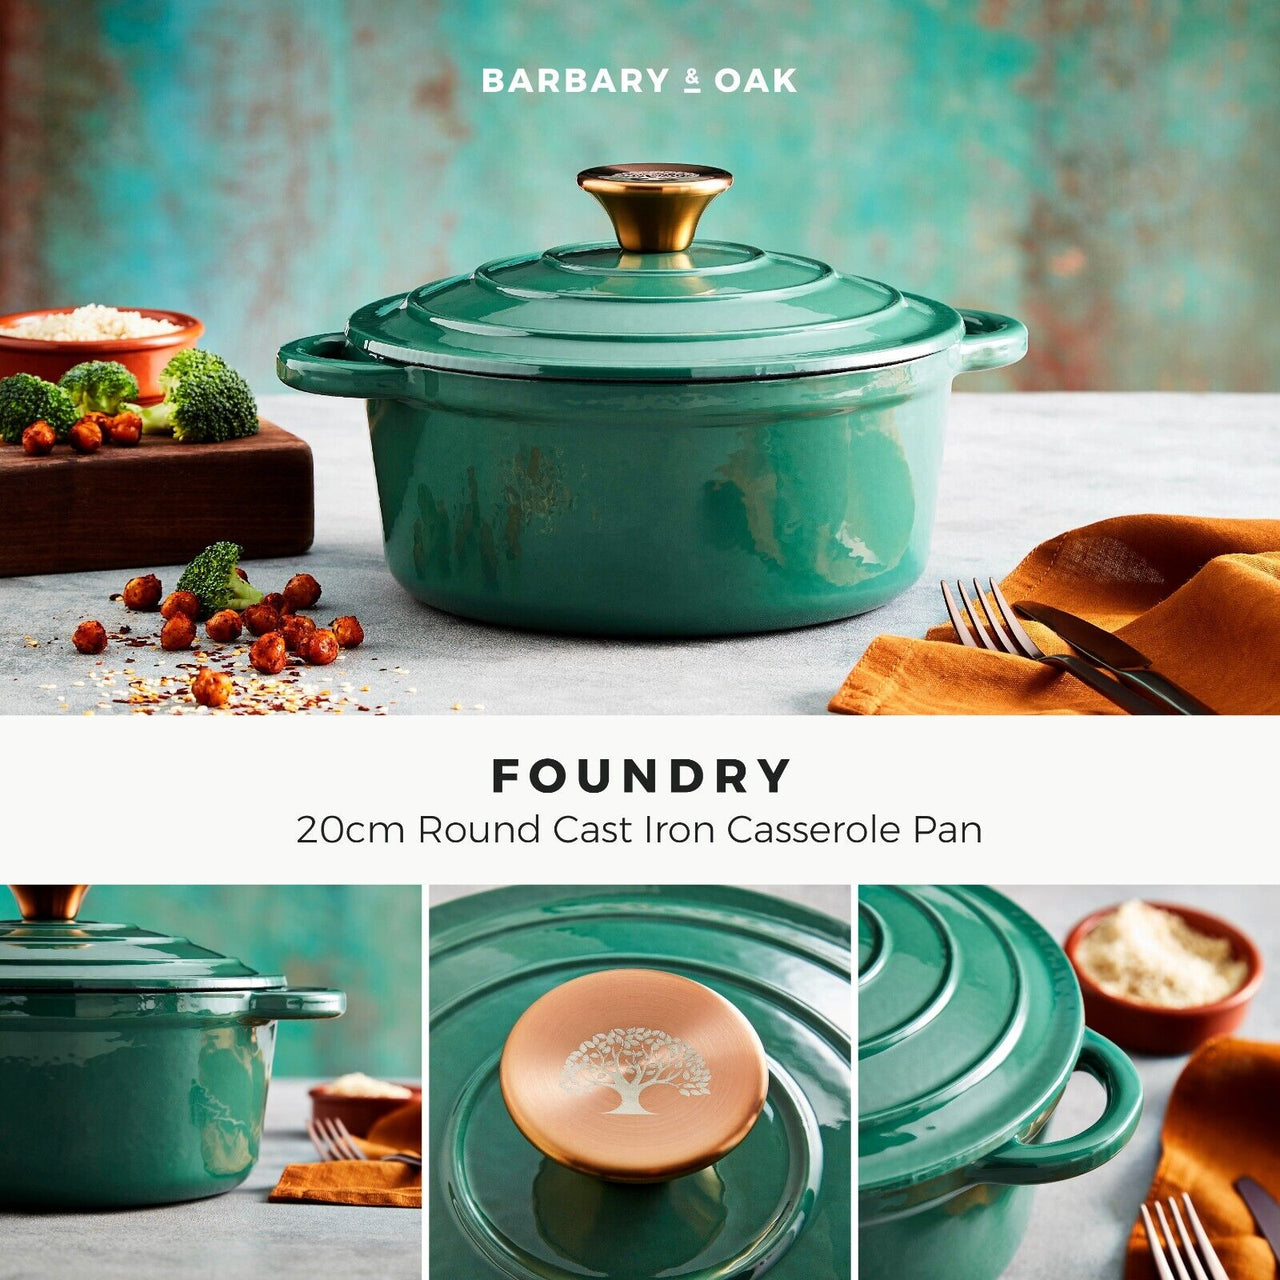 Barbary & Oak Foundry 20cm Round Casserole Pan Cast Iron in Verdigris Green